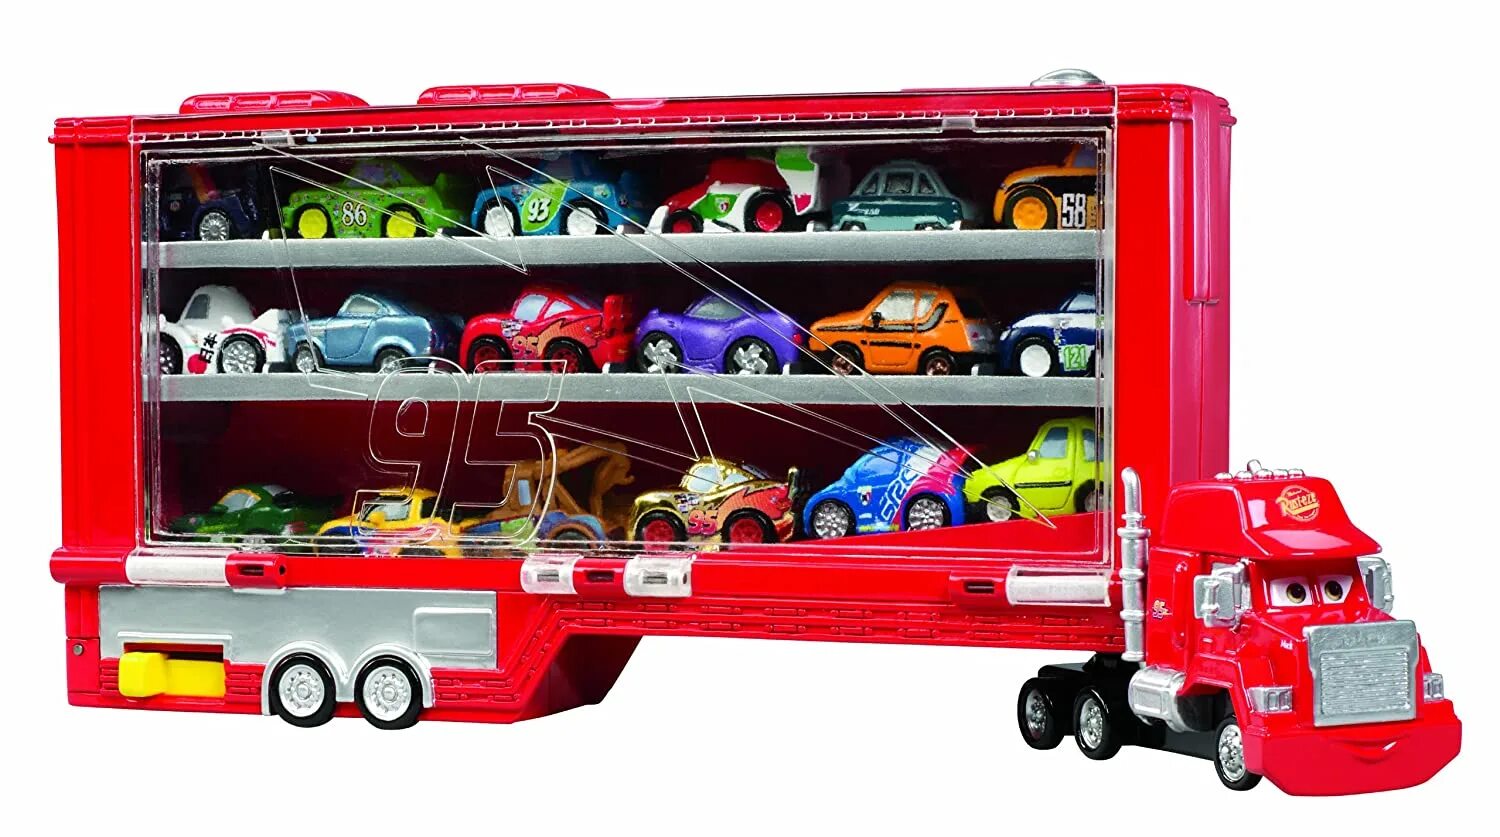 Включи грузовичок чемодан. Грузовик Mattel cars 2 Deluxe Mack (y0539/y0554) 1:50. Машинка с машинками внутри. Грузовик с маленькими машинками. Грузовик с машинками внутри.